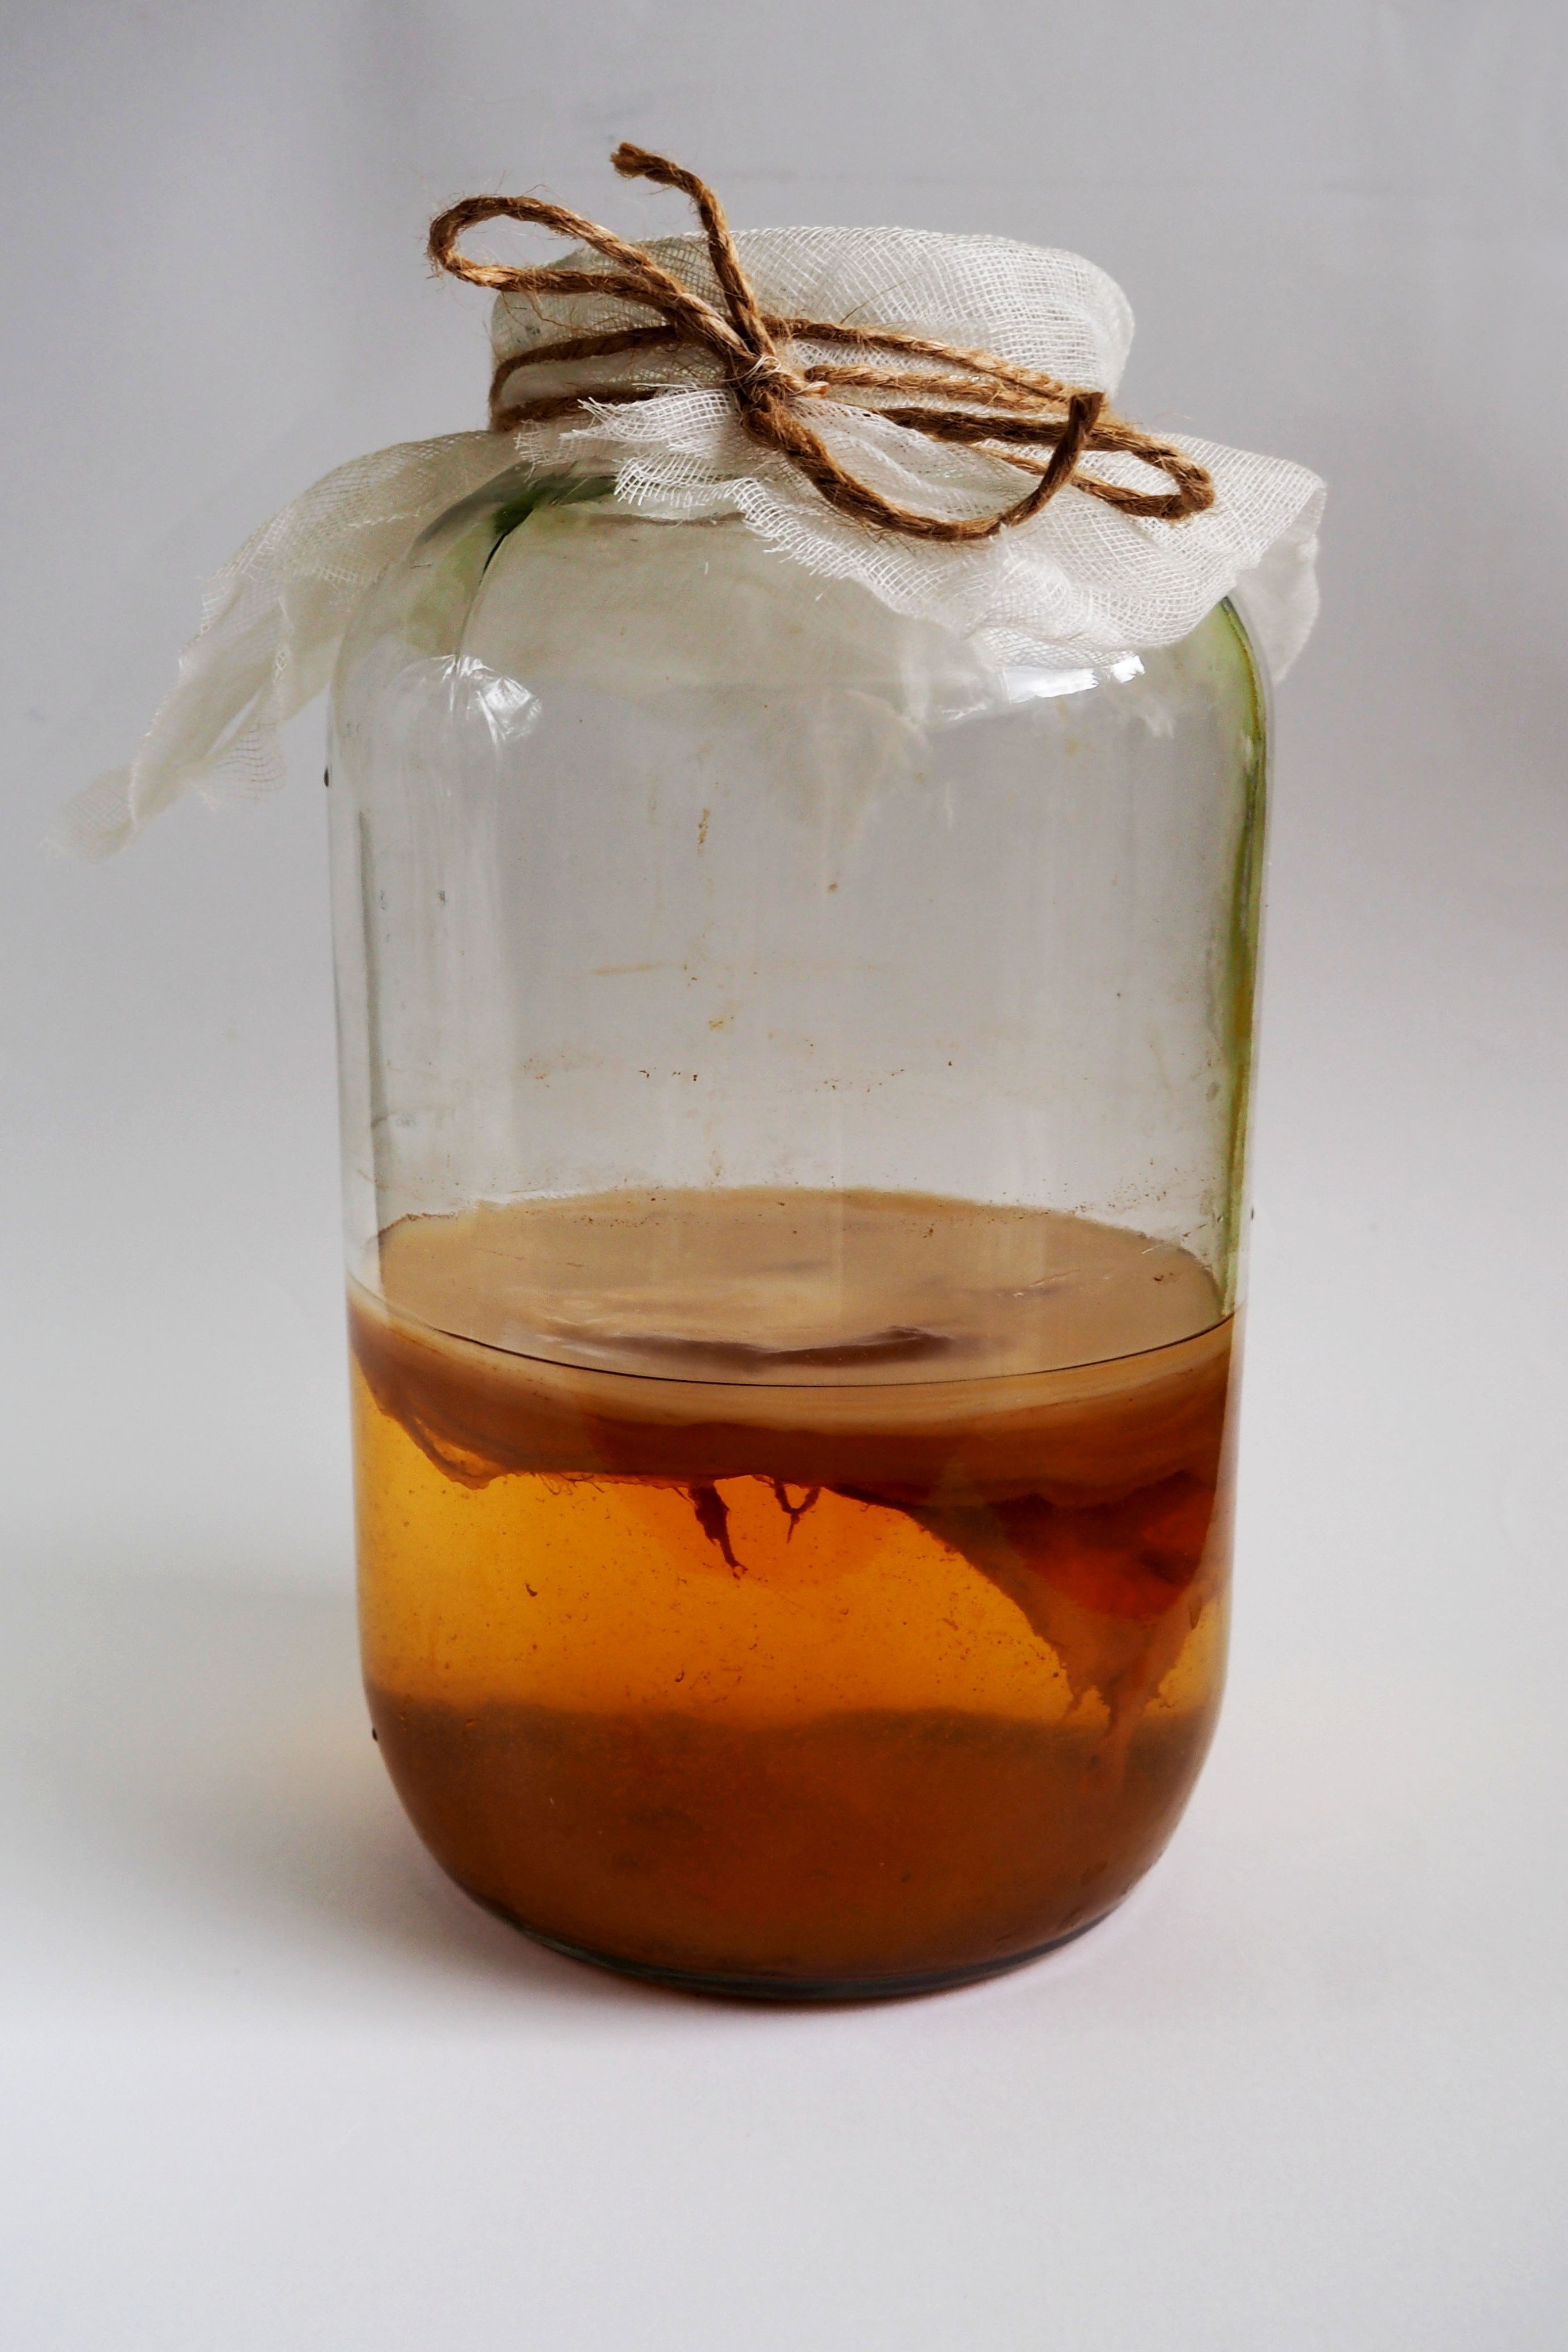 A jar of the fermented drink kombucha. Photo: Shutterstock